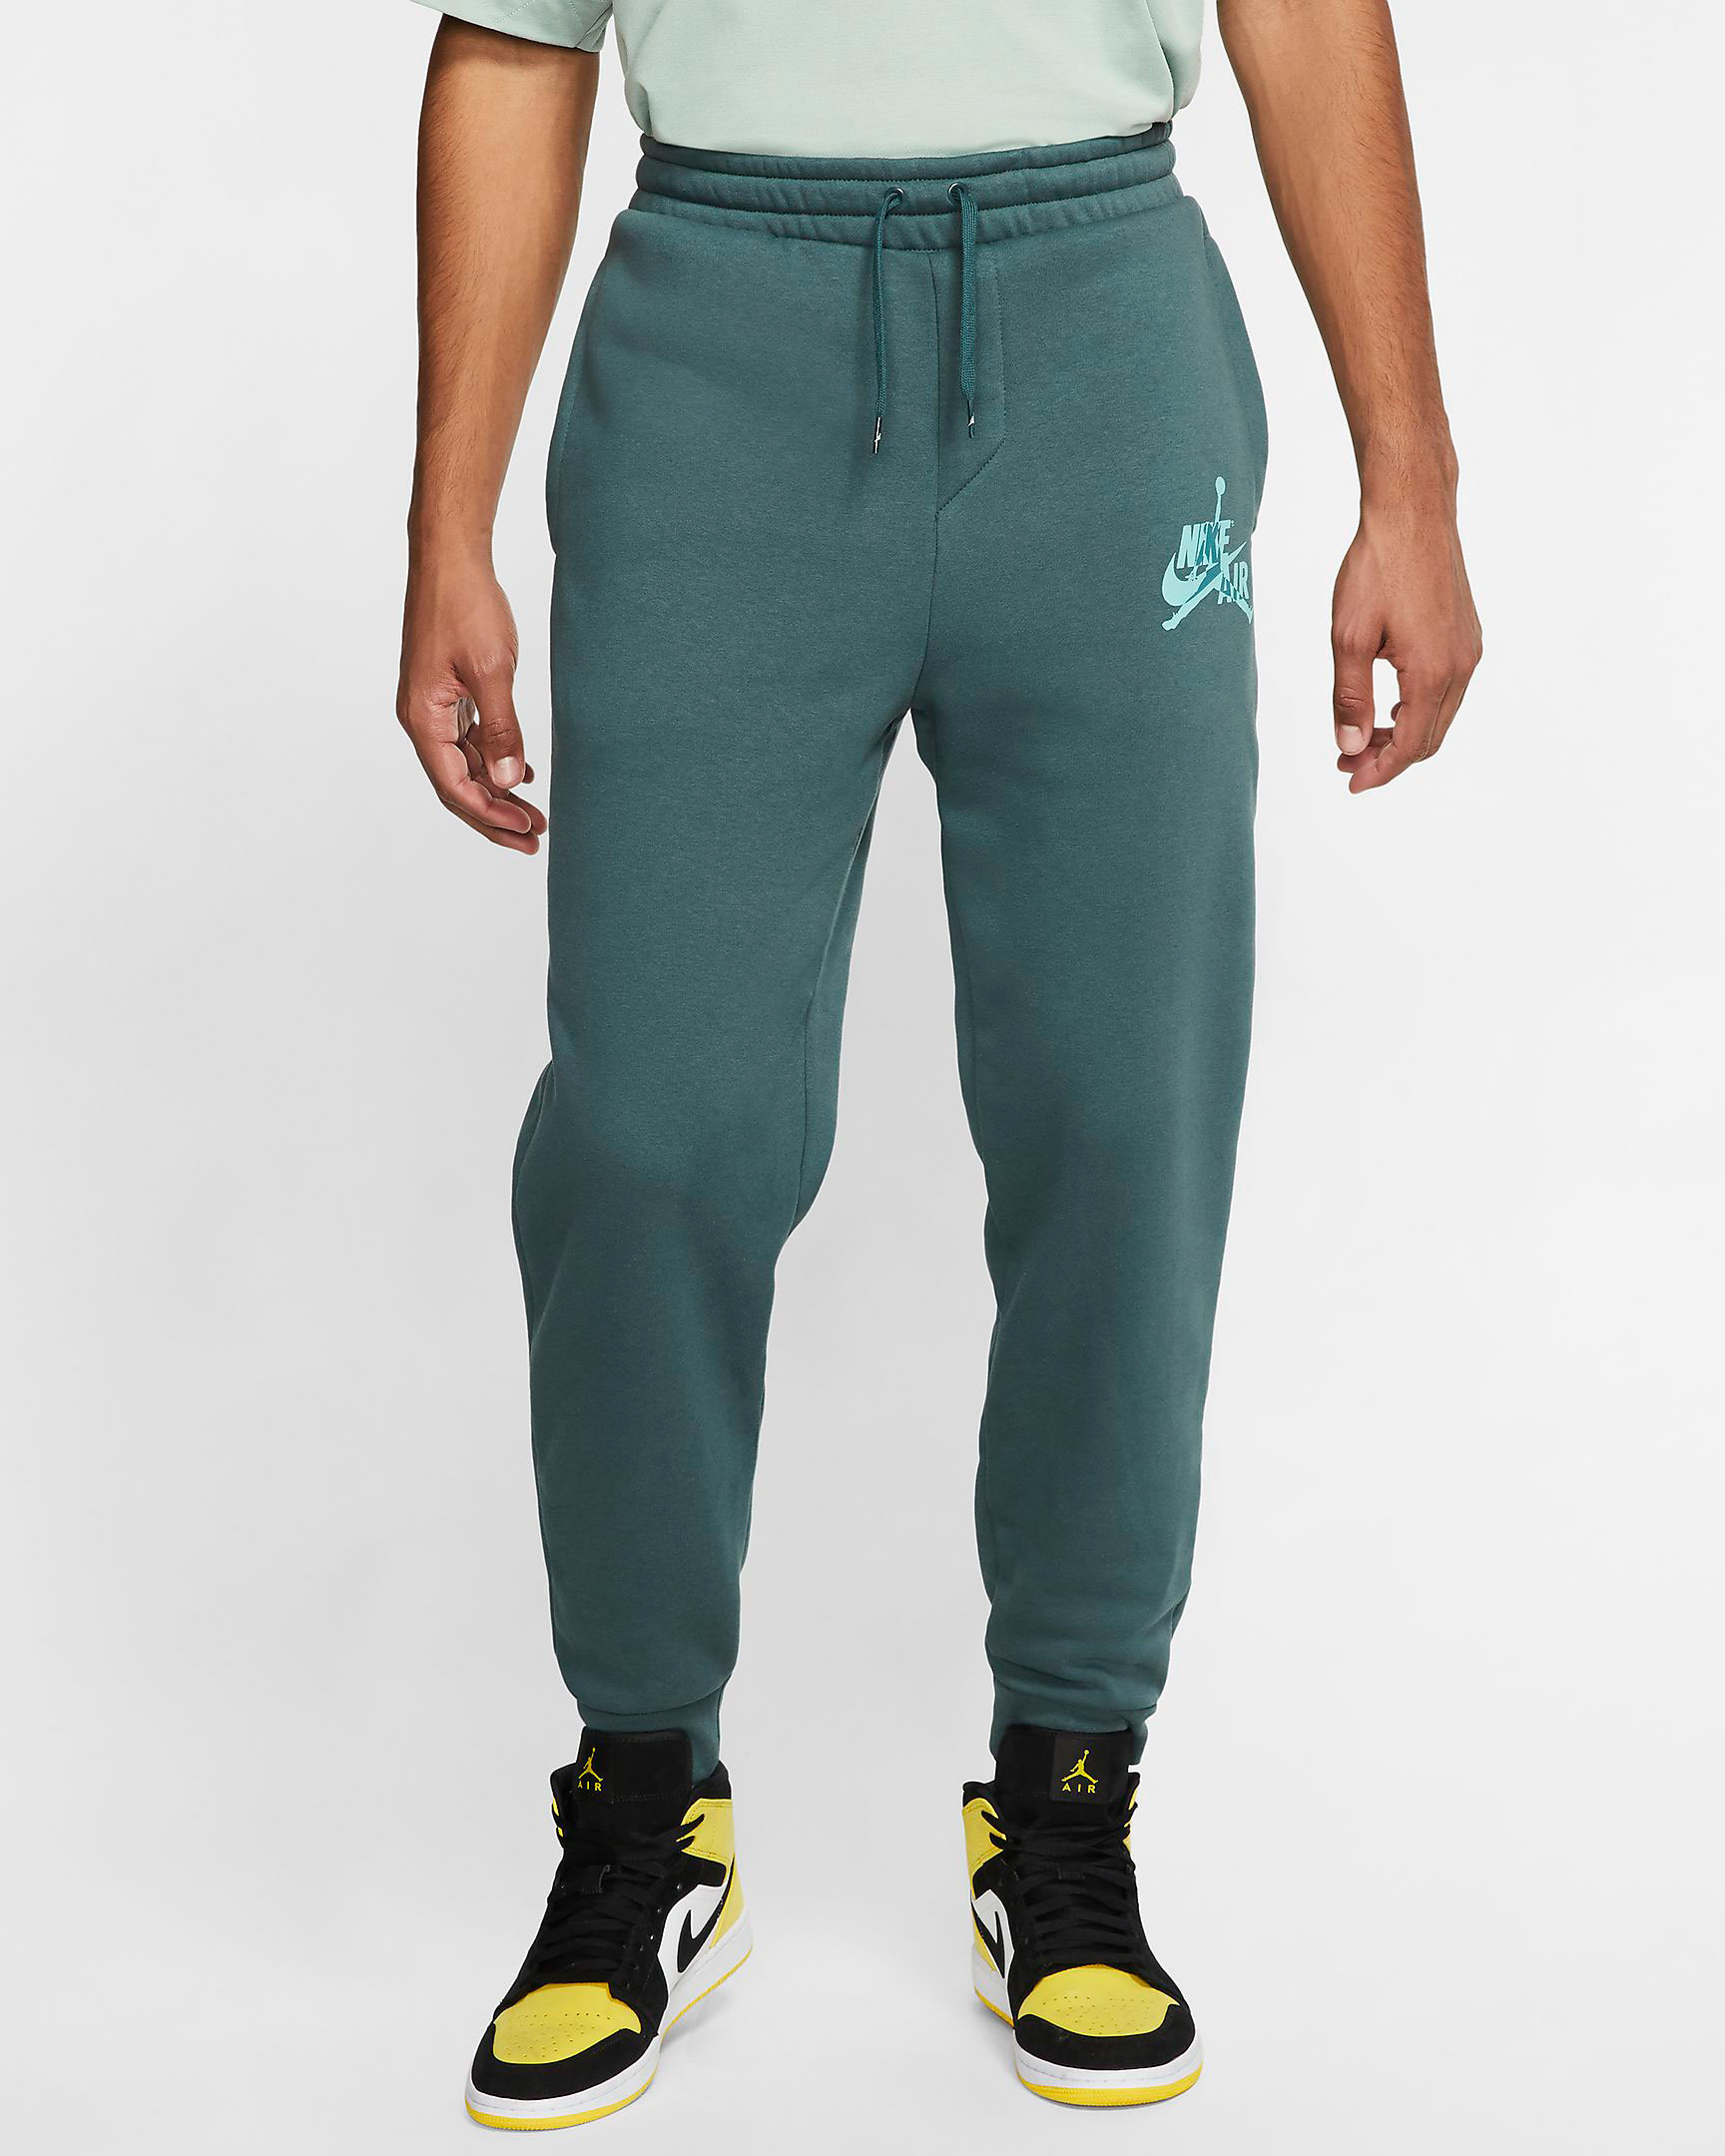 Air Jordan 5 and 13 Island Green Pants 